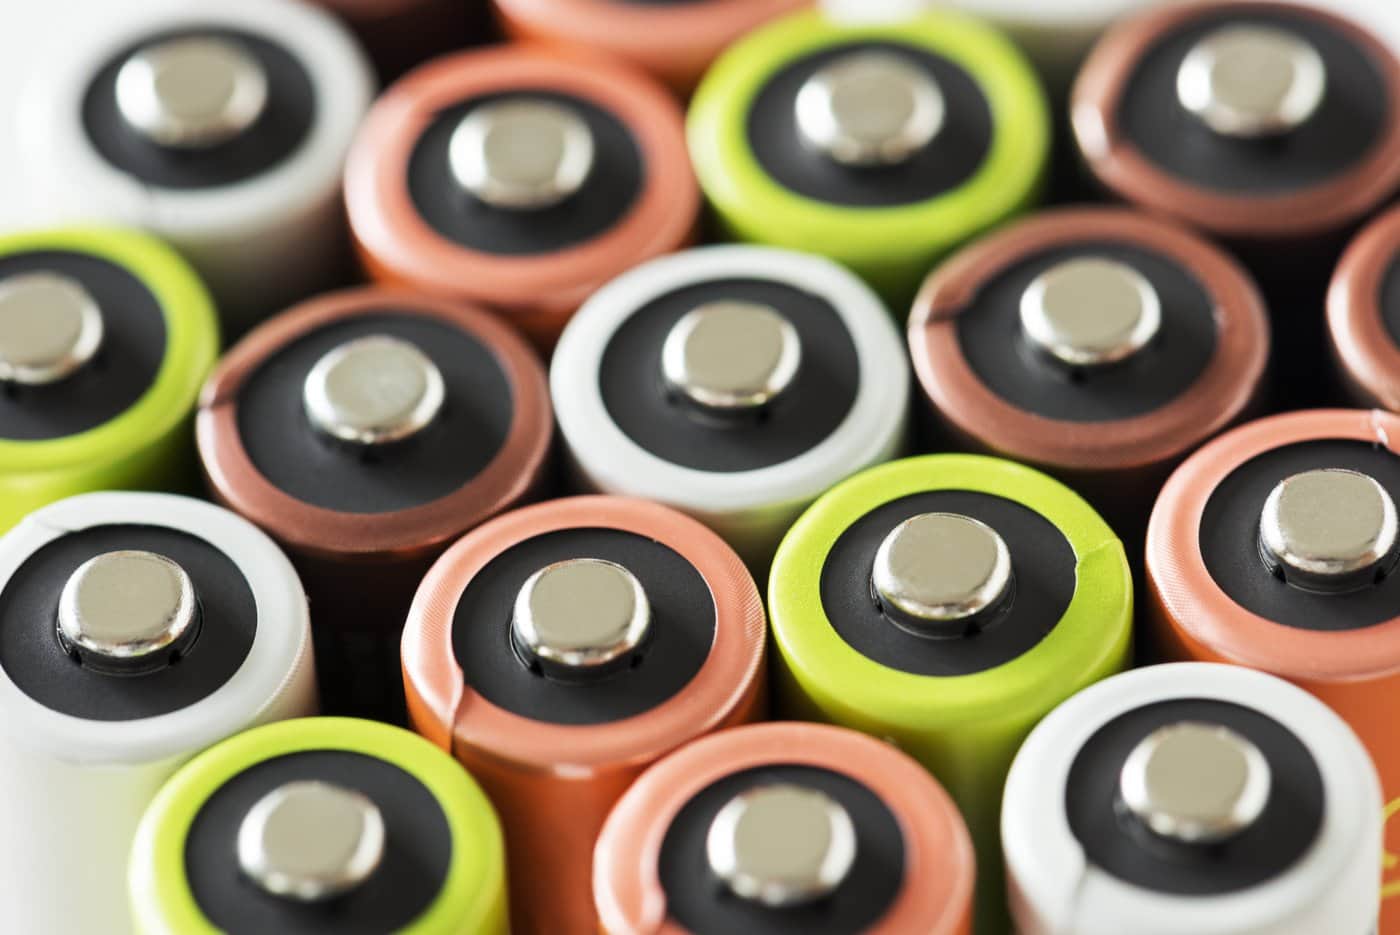 Box of AA alkaline batteries